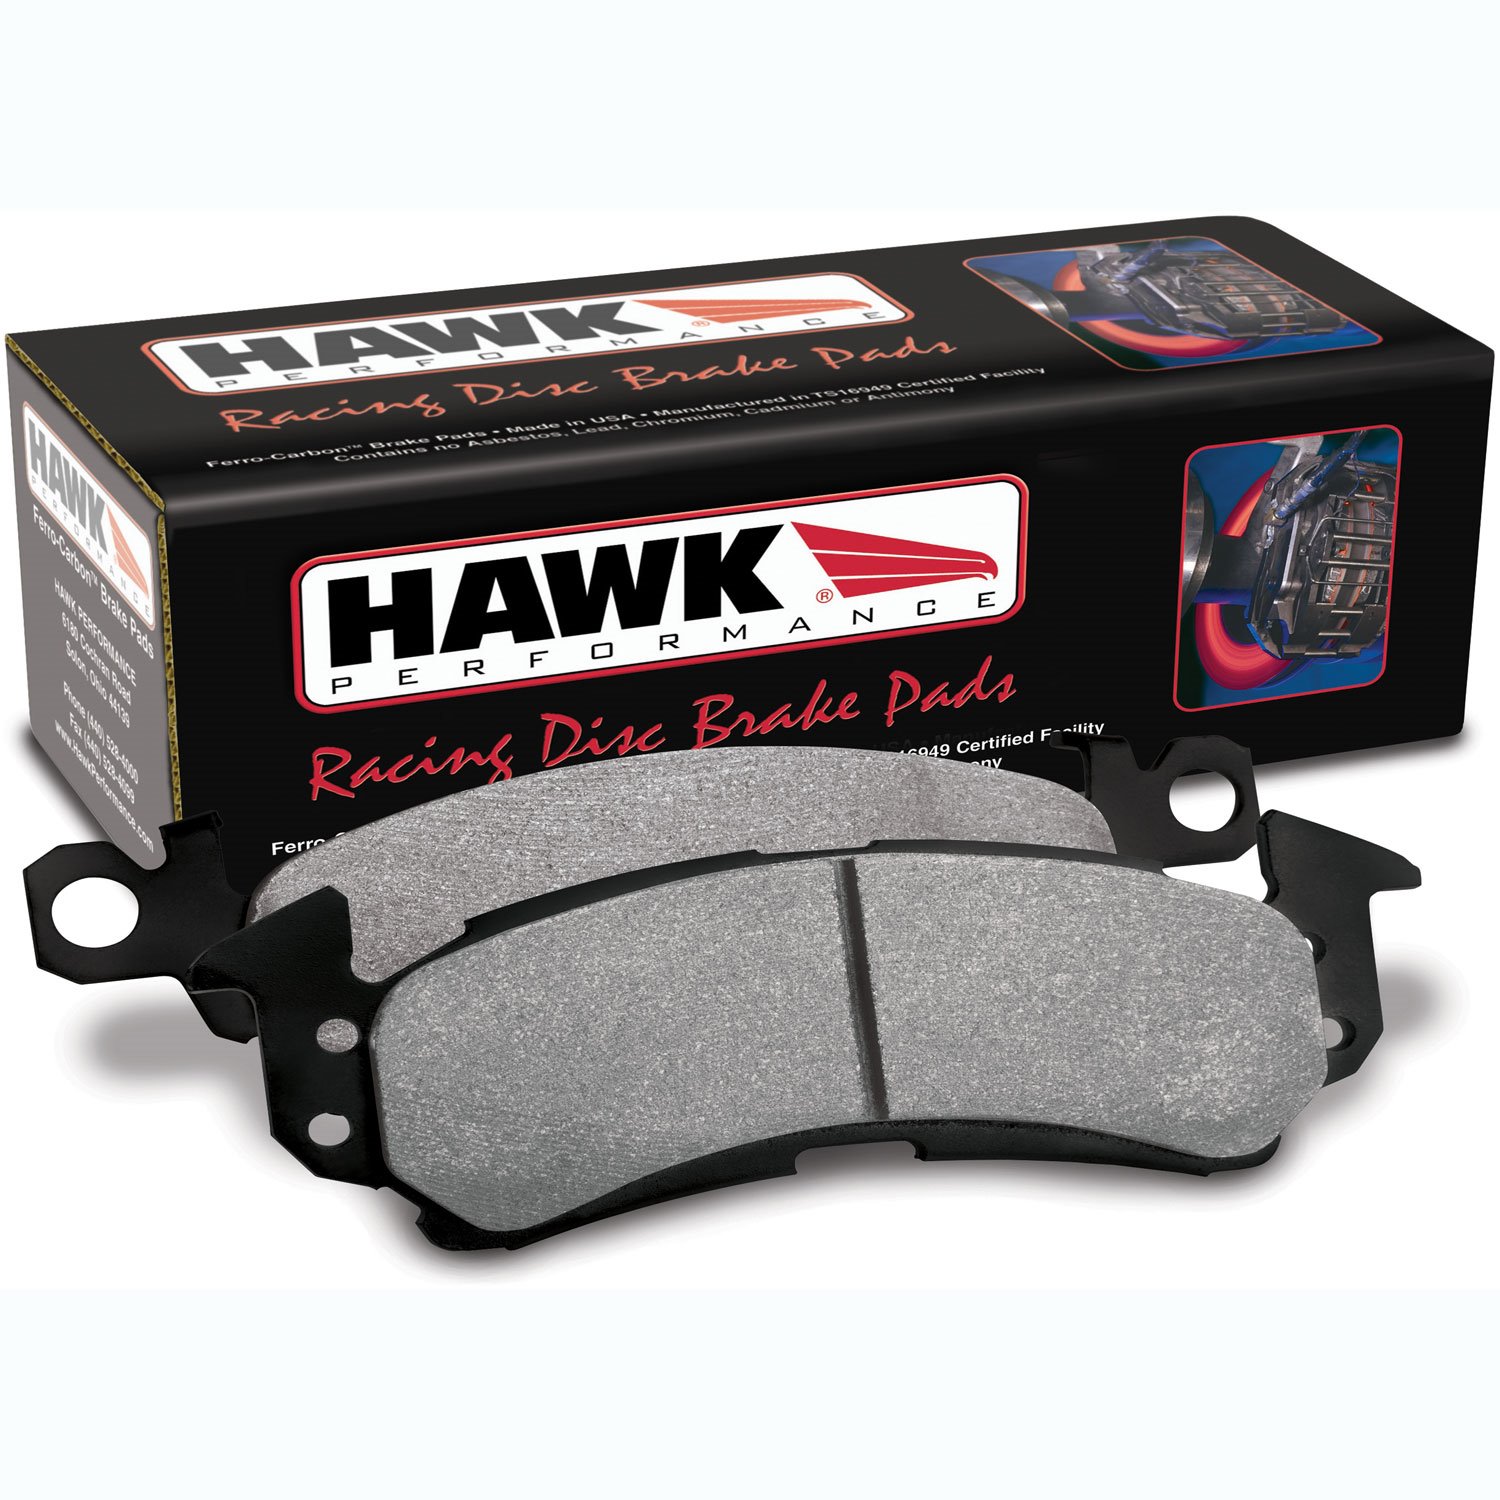 Disc Brake Pad HT-10 w/0.656 Thickness